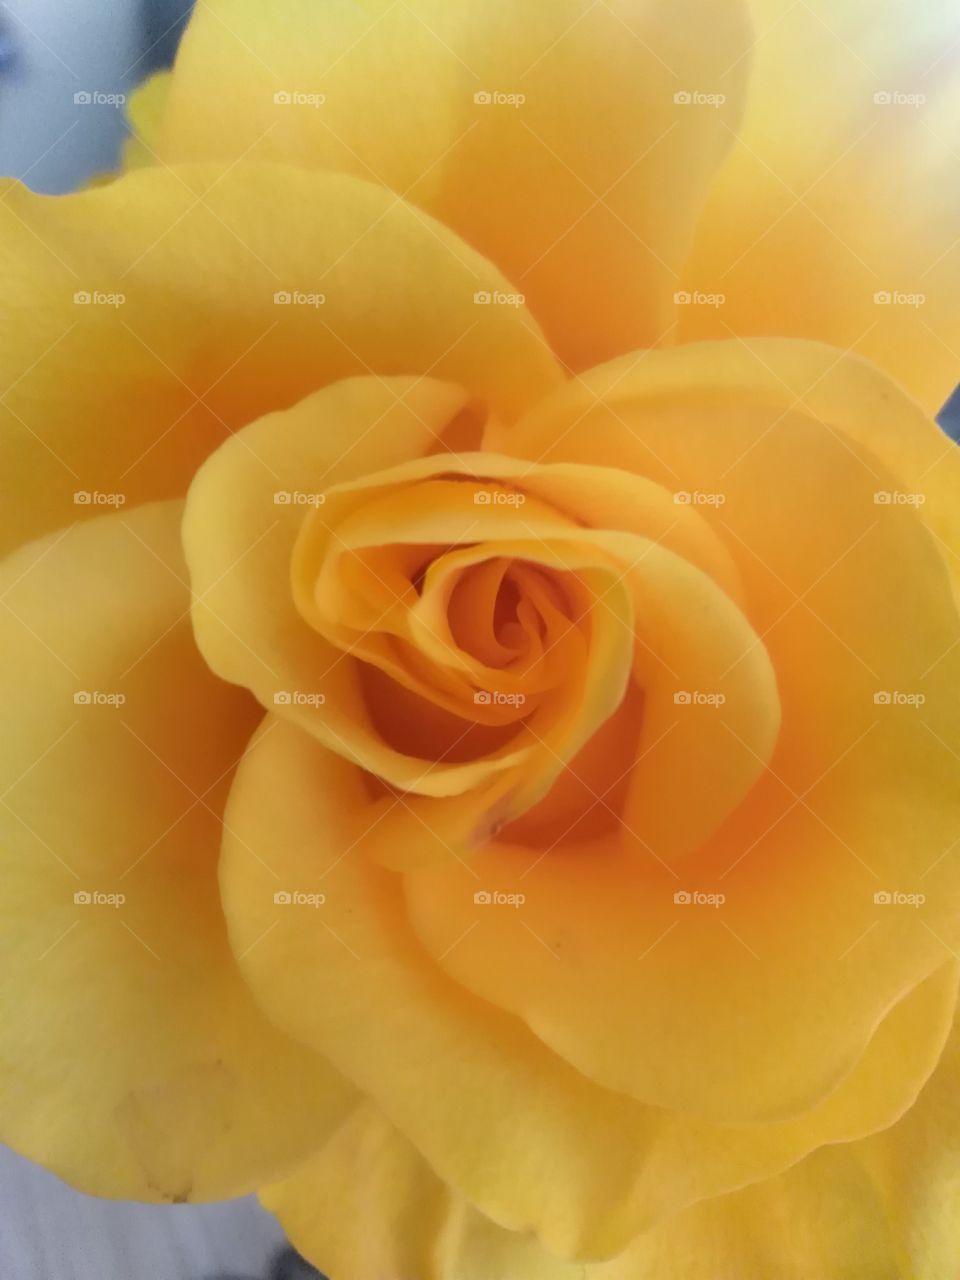 Best yellow rose